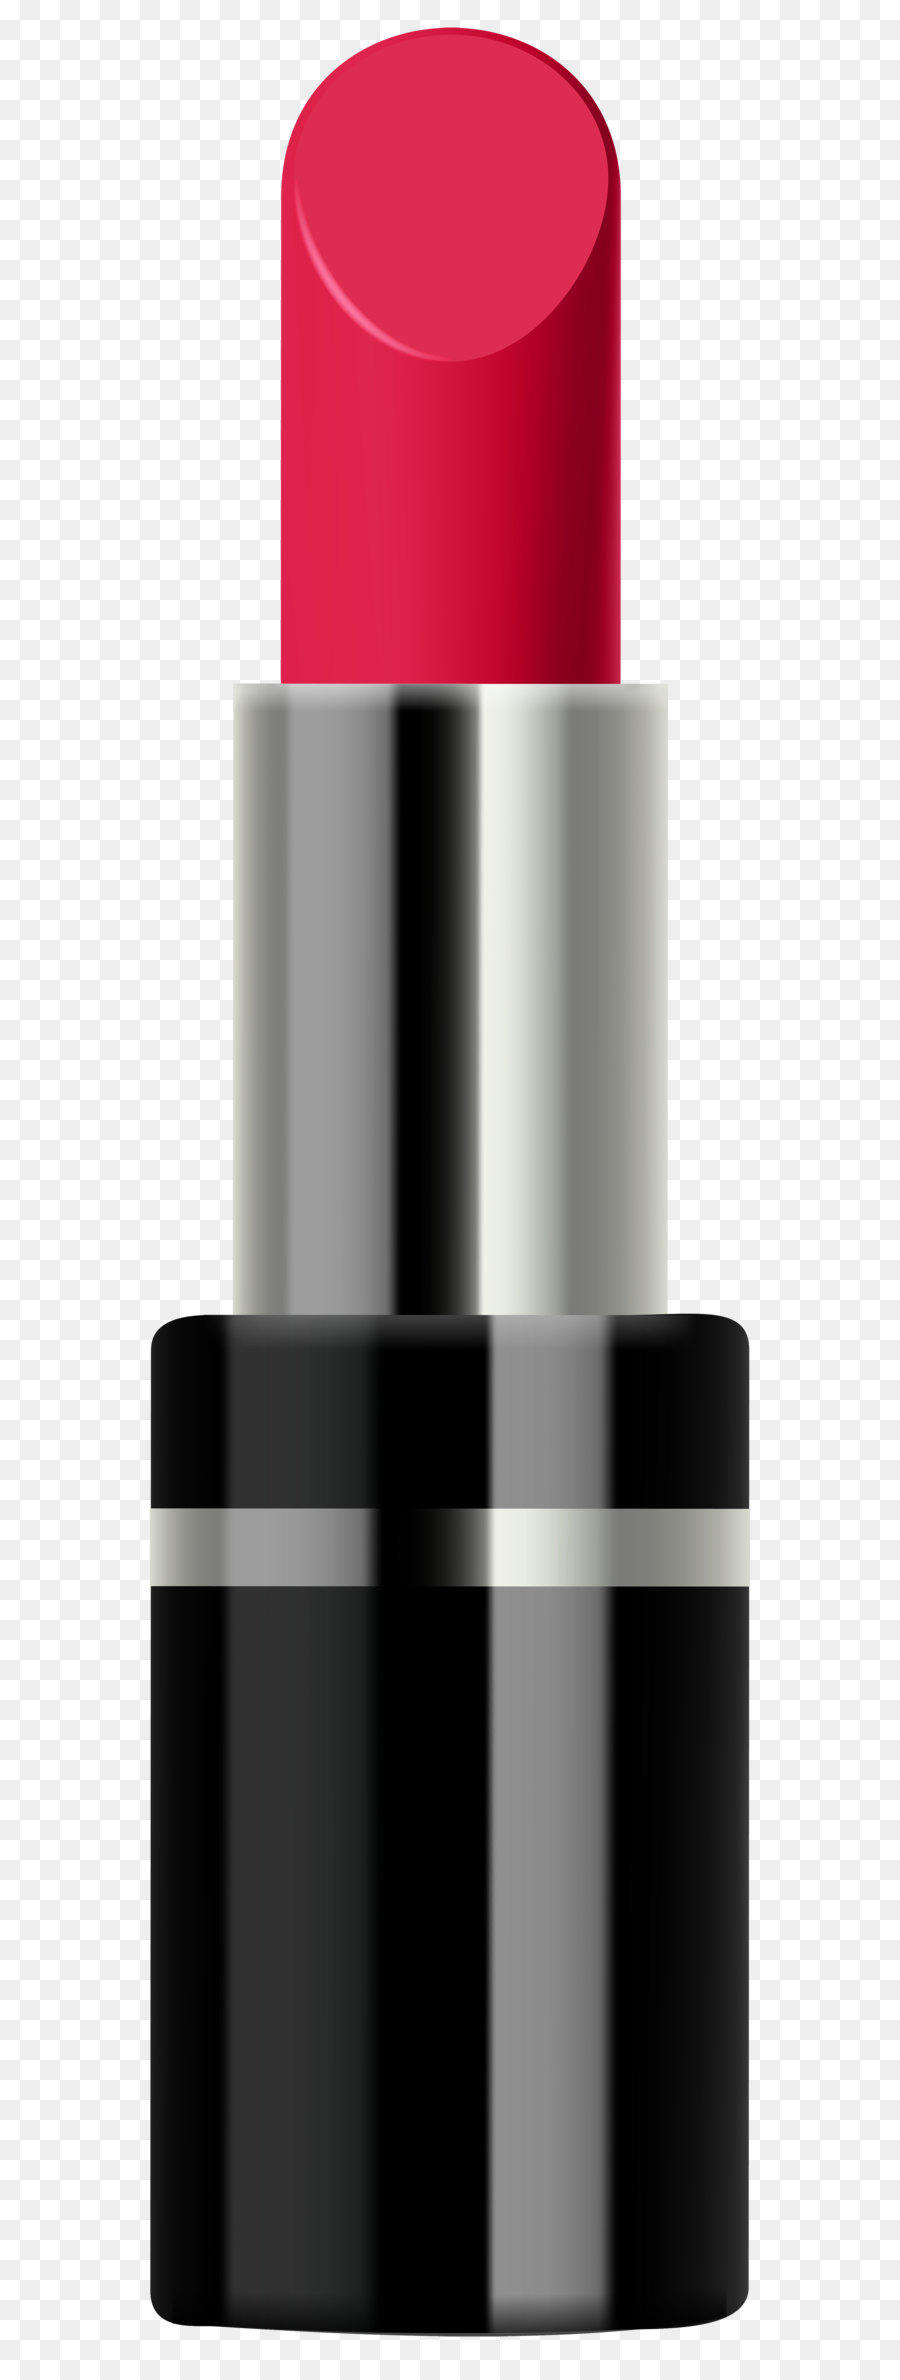 Lipstick Cosmetics Clip art - Red Lipstick PNG Transparent Clip Art Image png download - 2200*8000 - Free Transparent Lip Balm png Download.